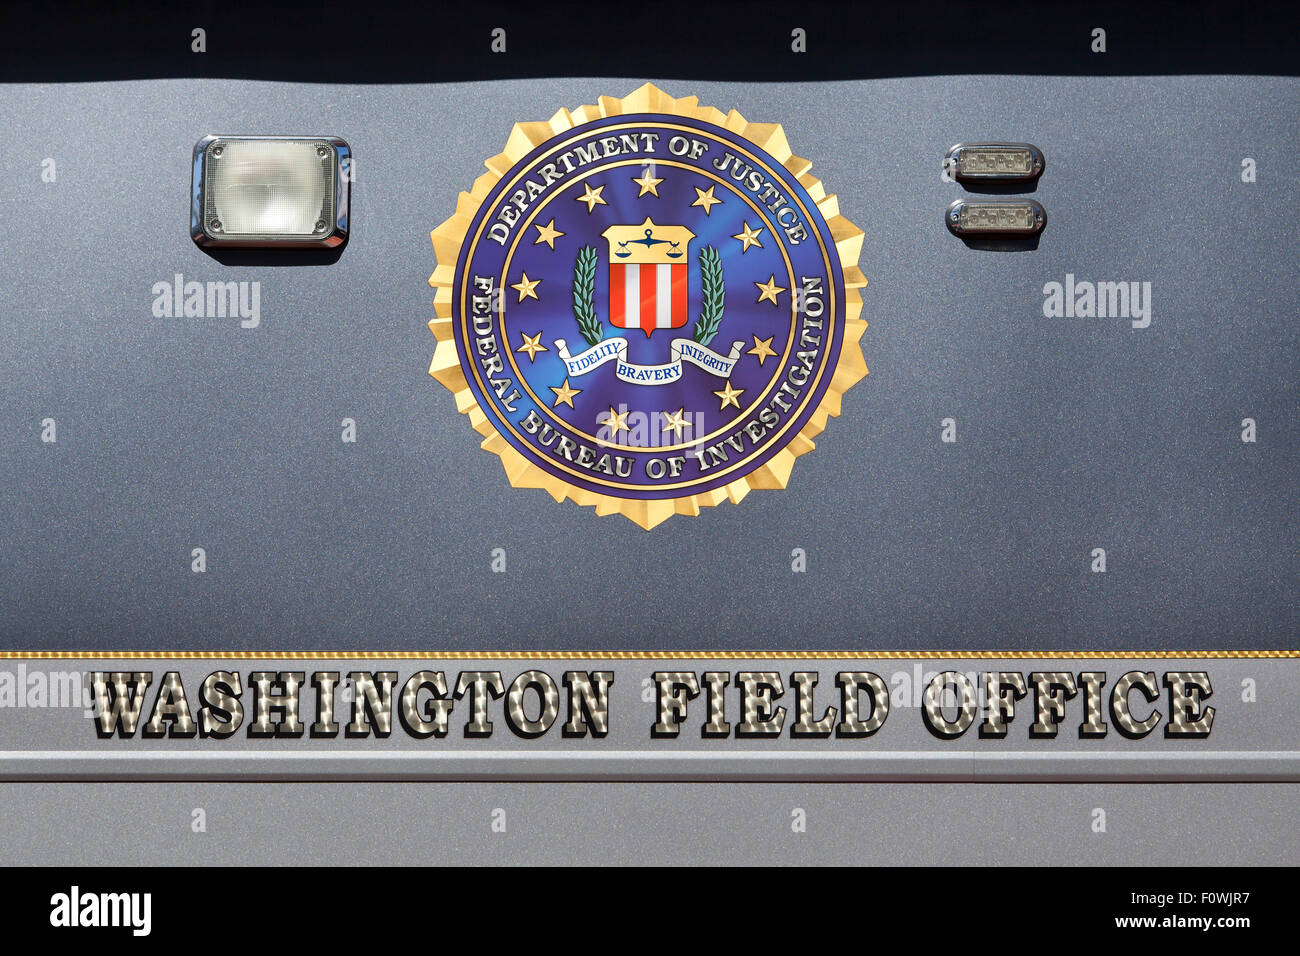 FBI Washington Field Office Central Command Vehicle - Washington, DC USA Stock Photo